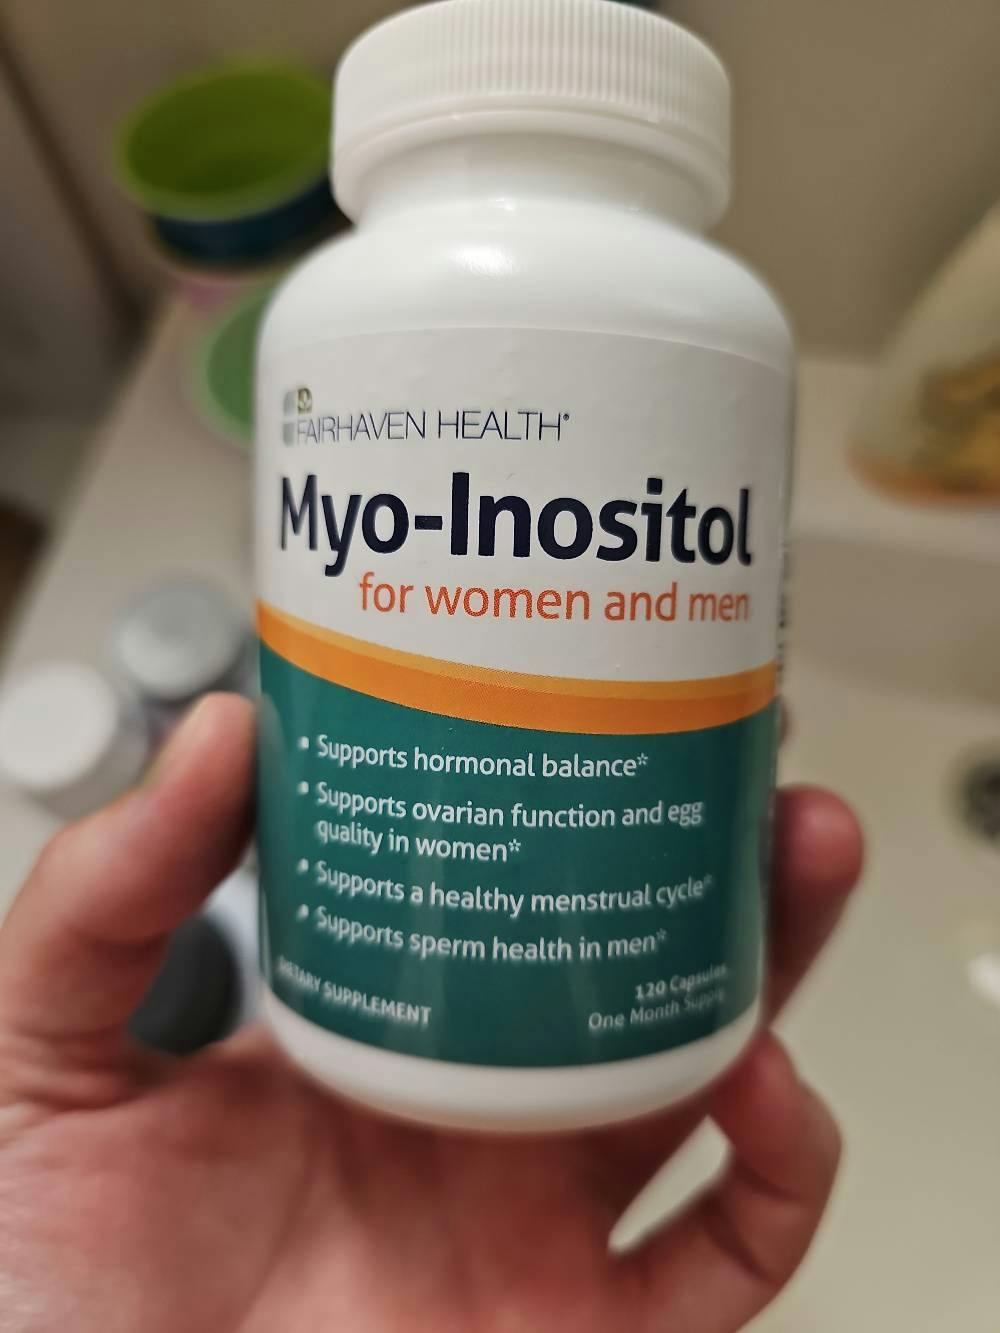 Myo-Inositol, Fairhaven health